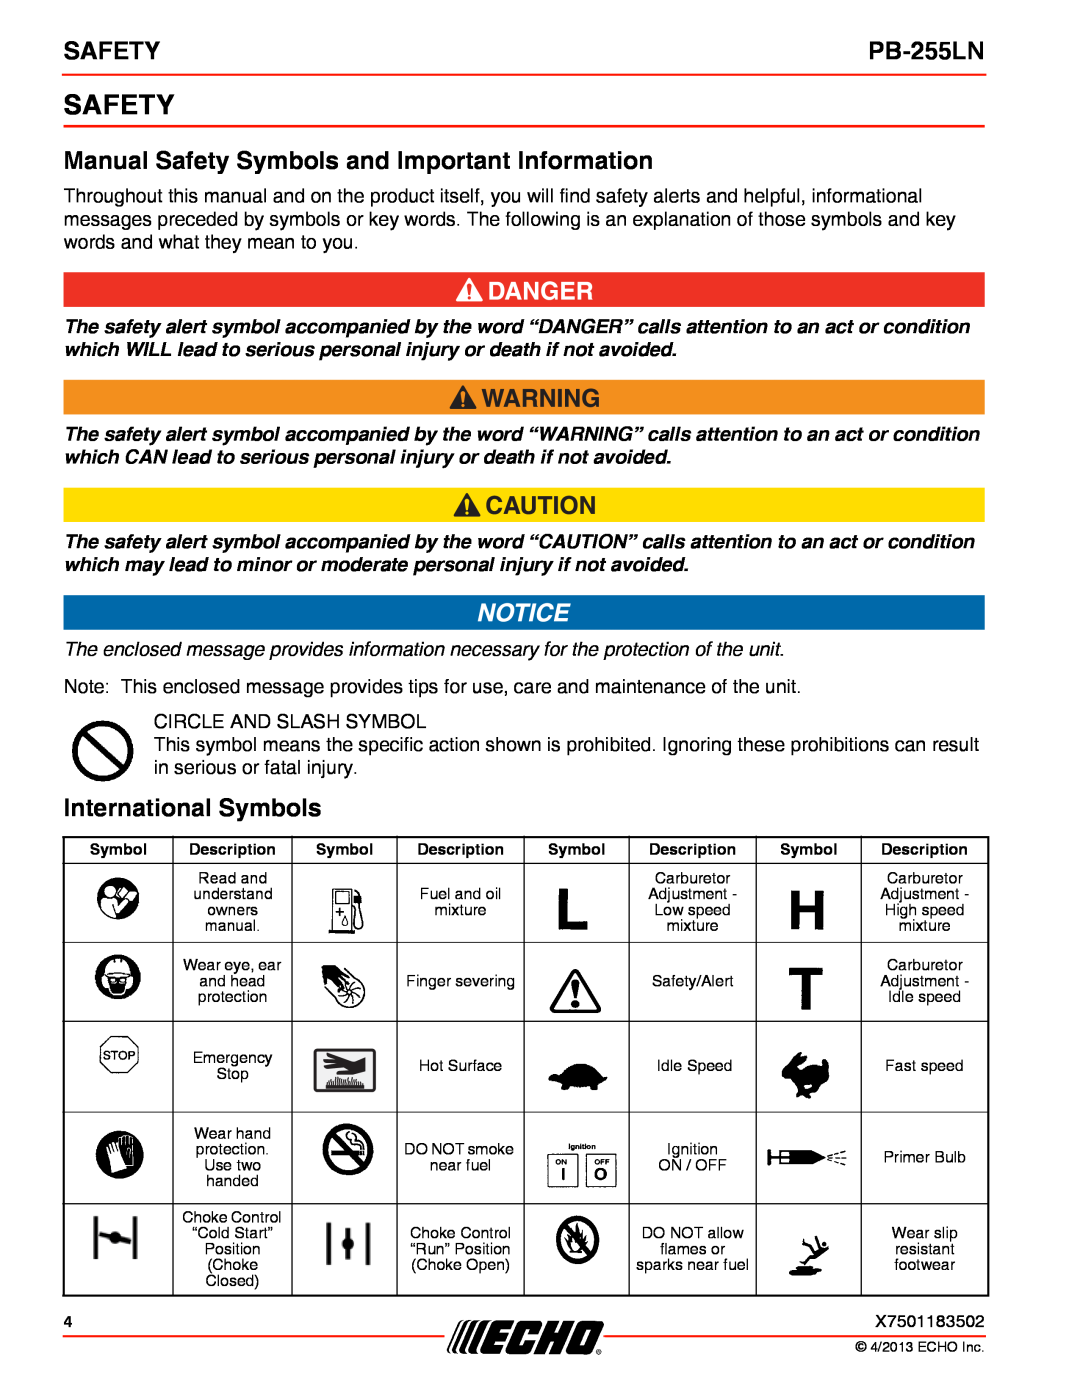 Echo PB-255LN specifications Manual Safety Symbols and Important Information, International Symbols 